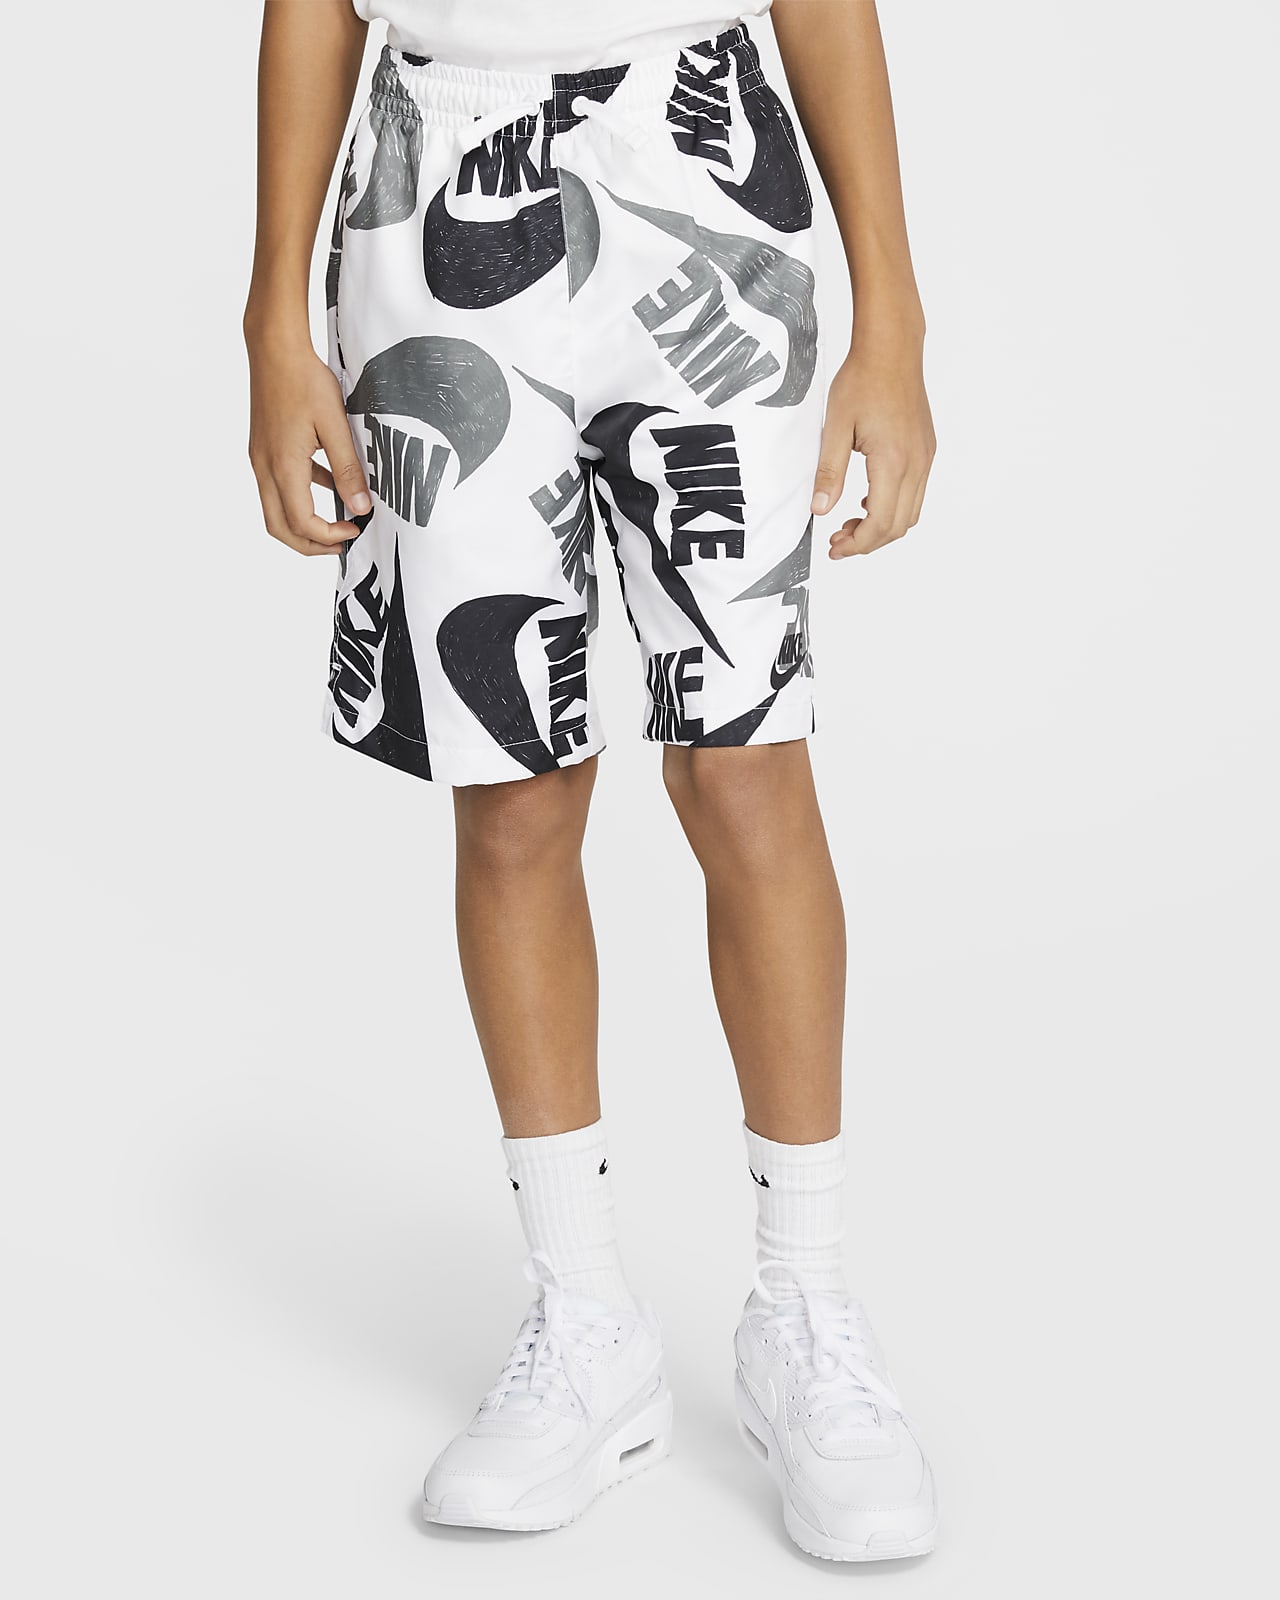 Woven Printed Shorts. Nike LU